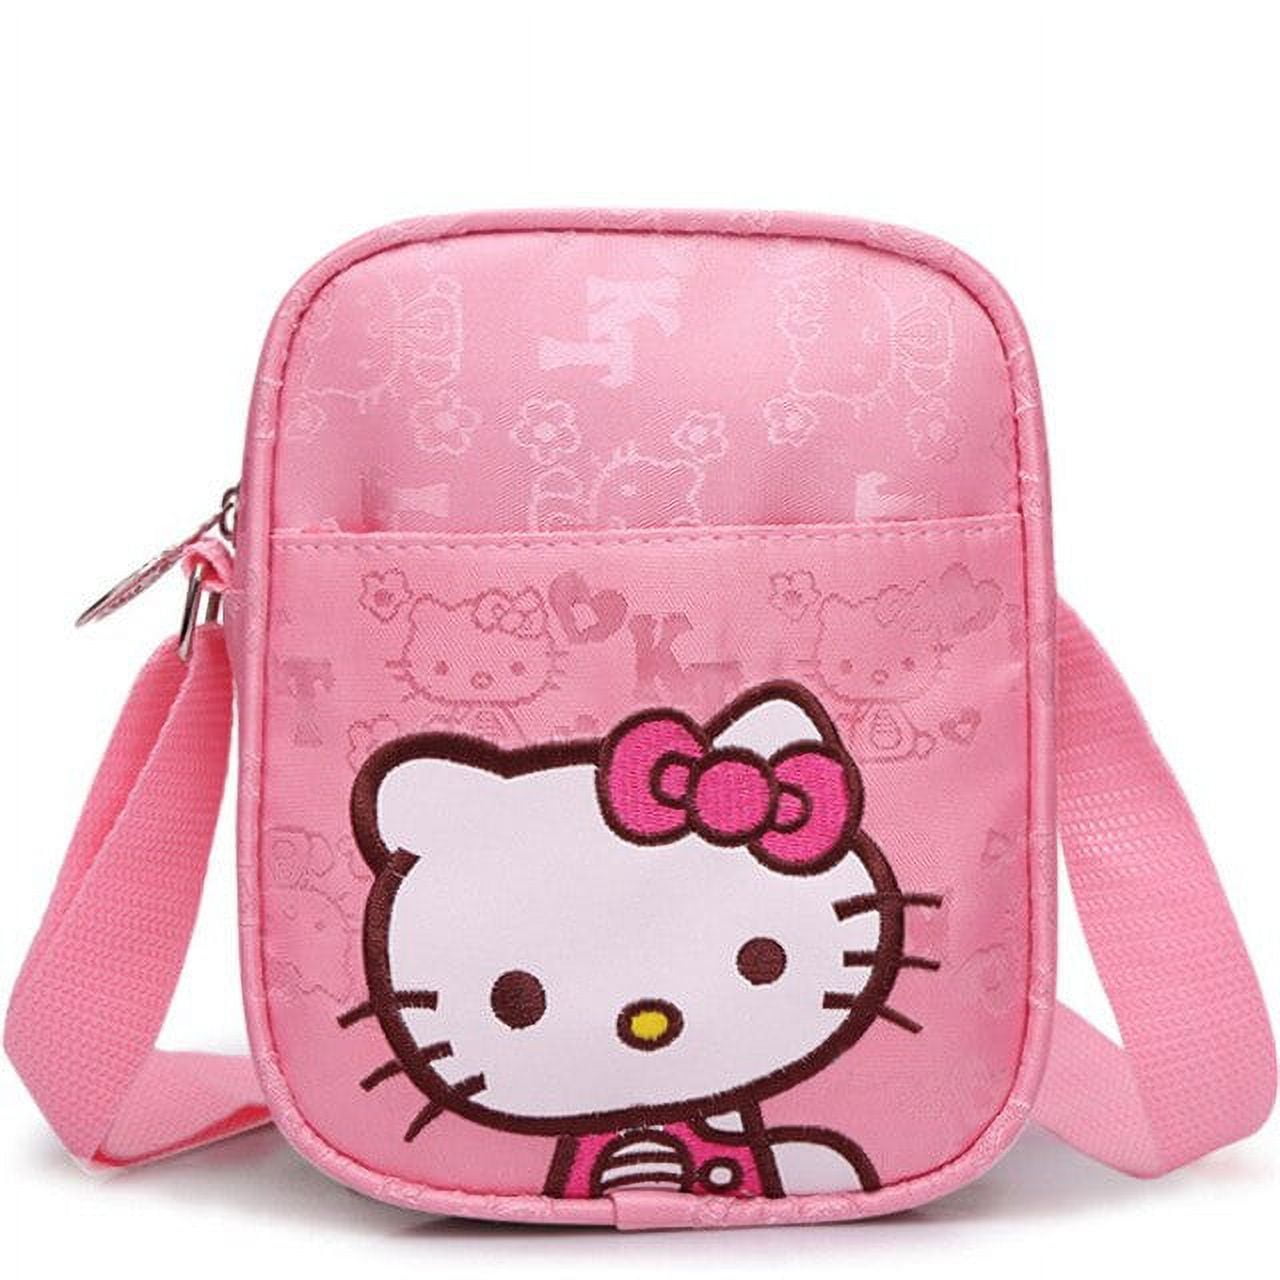 2023 Anime Hello Kitty Shoulder Bag Cartoon Cute Purses and Handbags Crossbody Bags for Women Fashionable Purses Tote Bags 8ab2288e ce84 45f5 b5f9 735f6869ad53.3b434f811a598f47a71baf1847f432f4